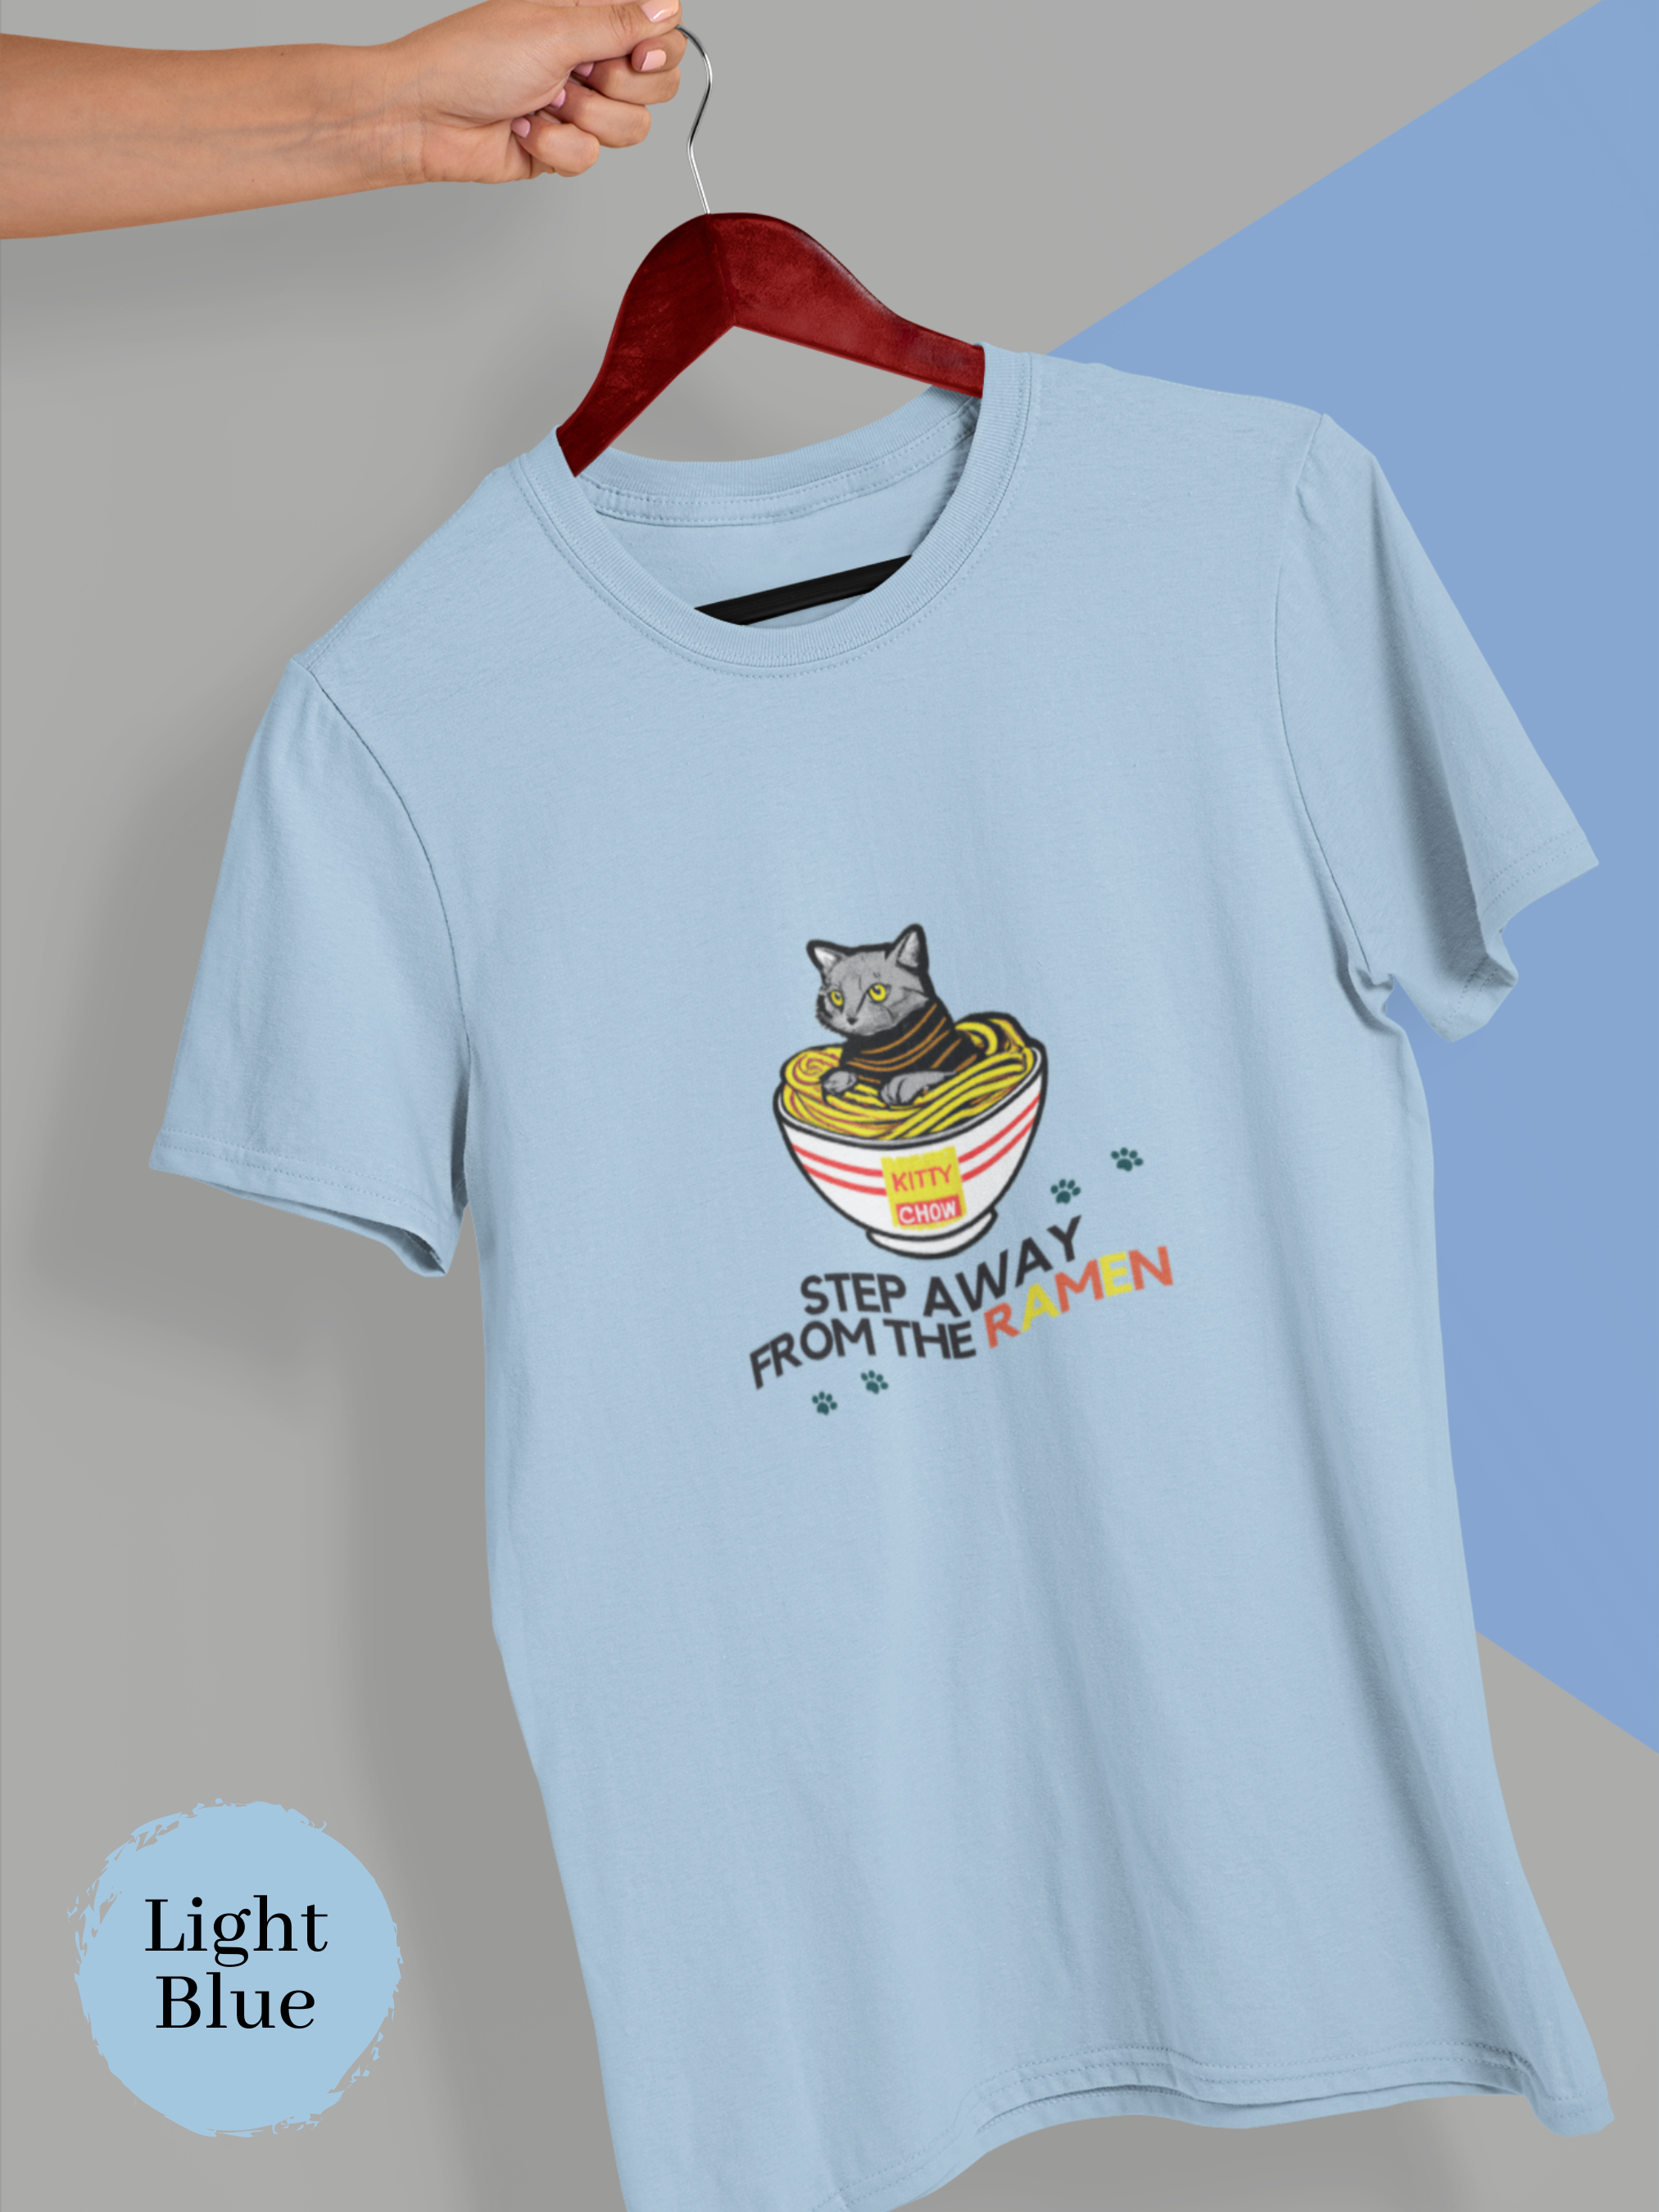 Ramen T-Shirt: Japanese Foodie Shirt with Cute Cat Illustration and Ramen Art - Step Away From the Ramen